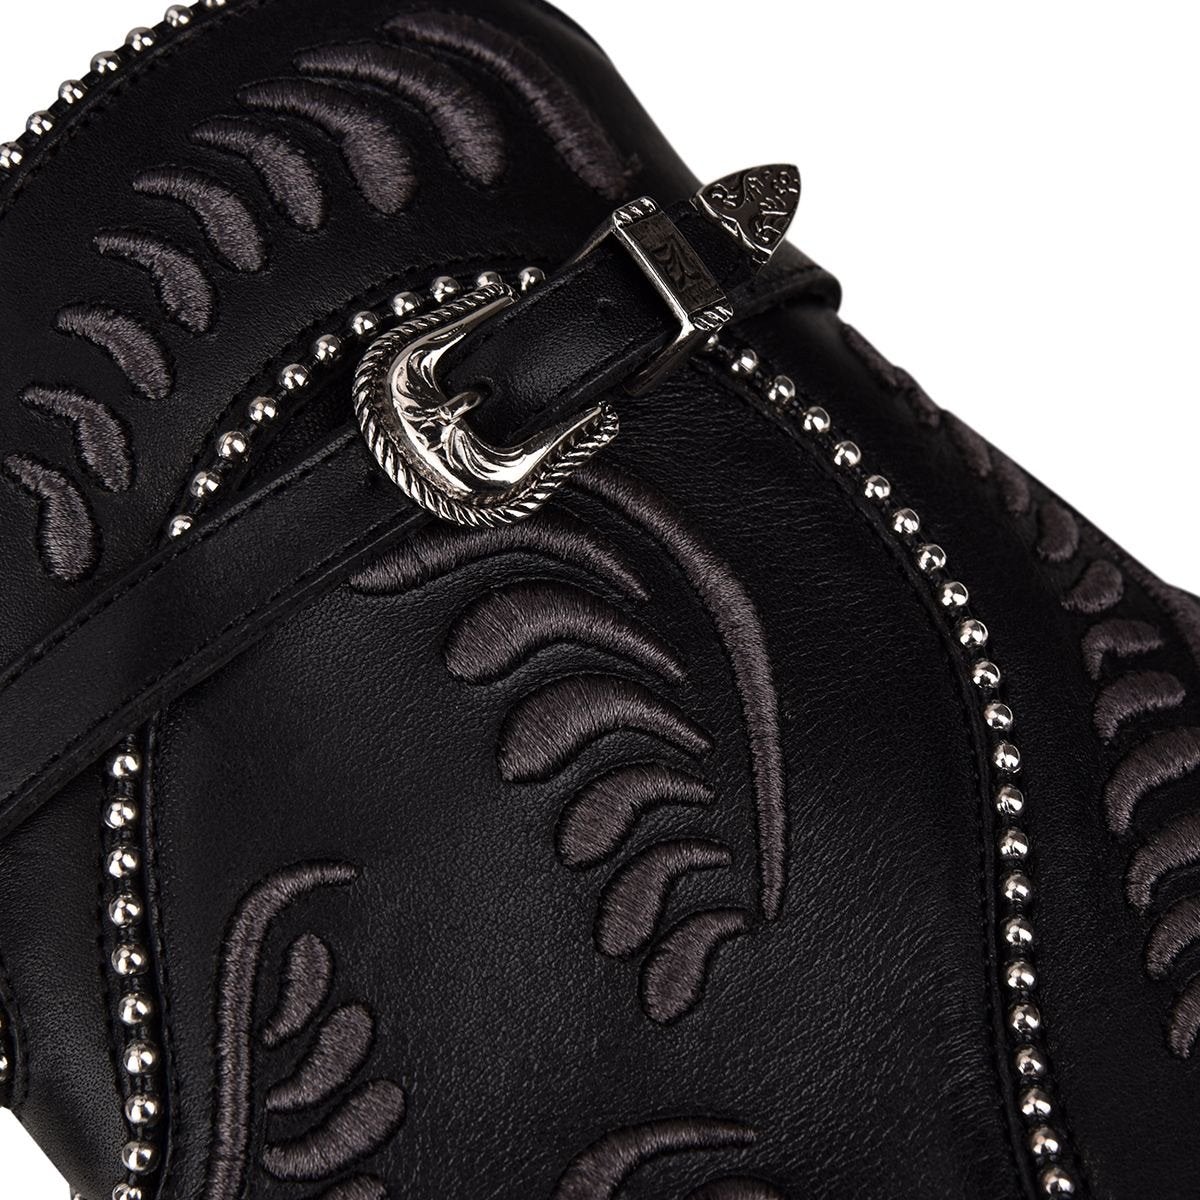 3F59PH - Cuadra black fashion cowboy python leather ankle boots for women-CUADRA-Kuet-Cuadra-Boots